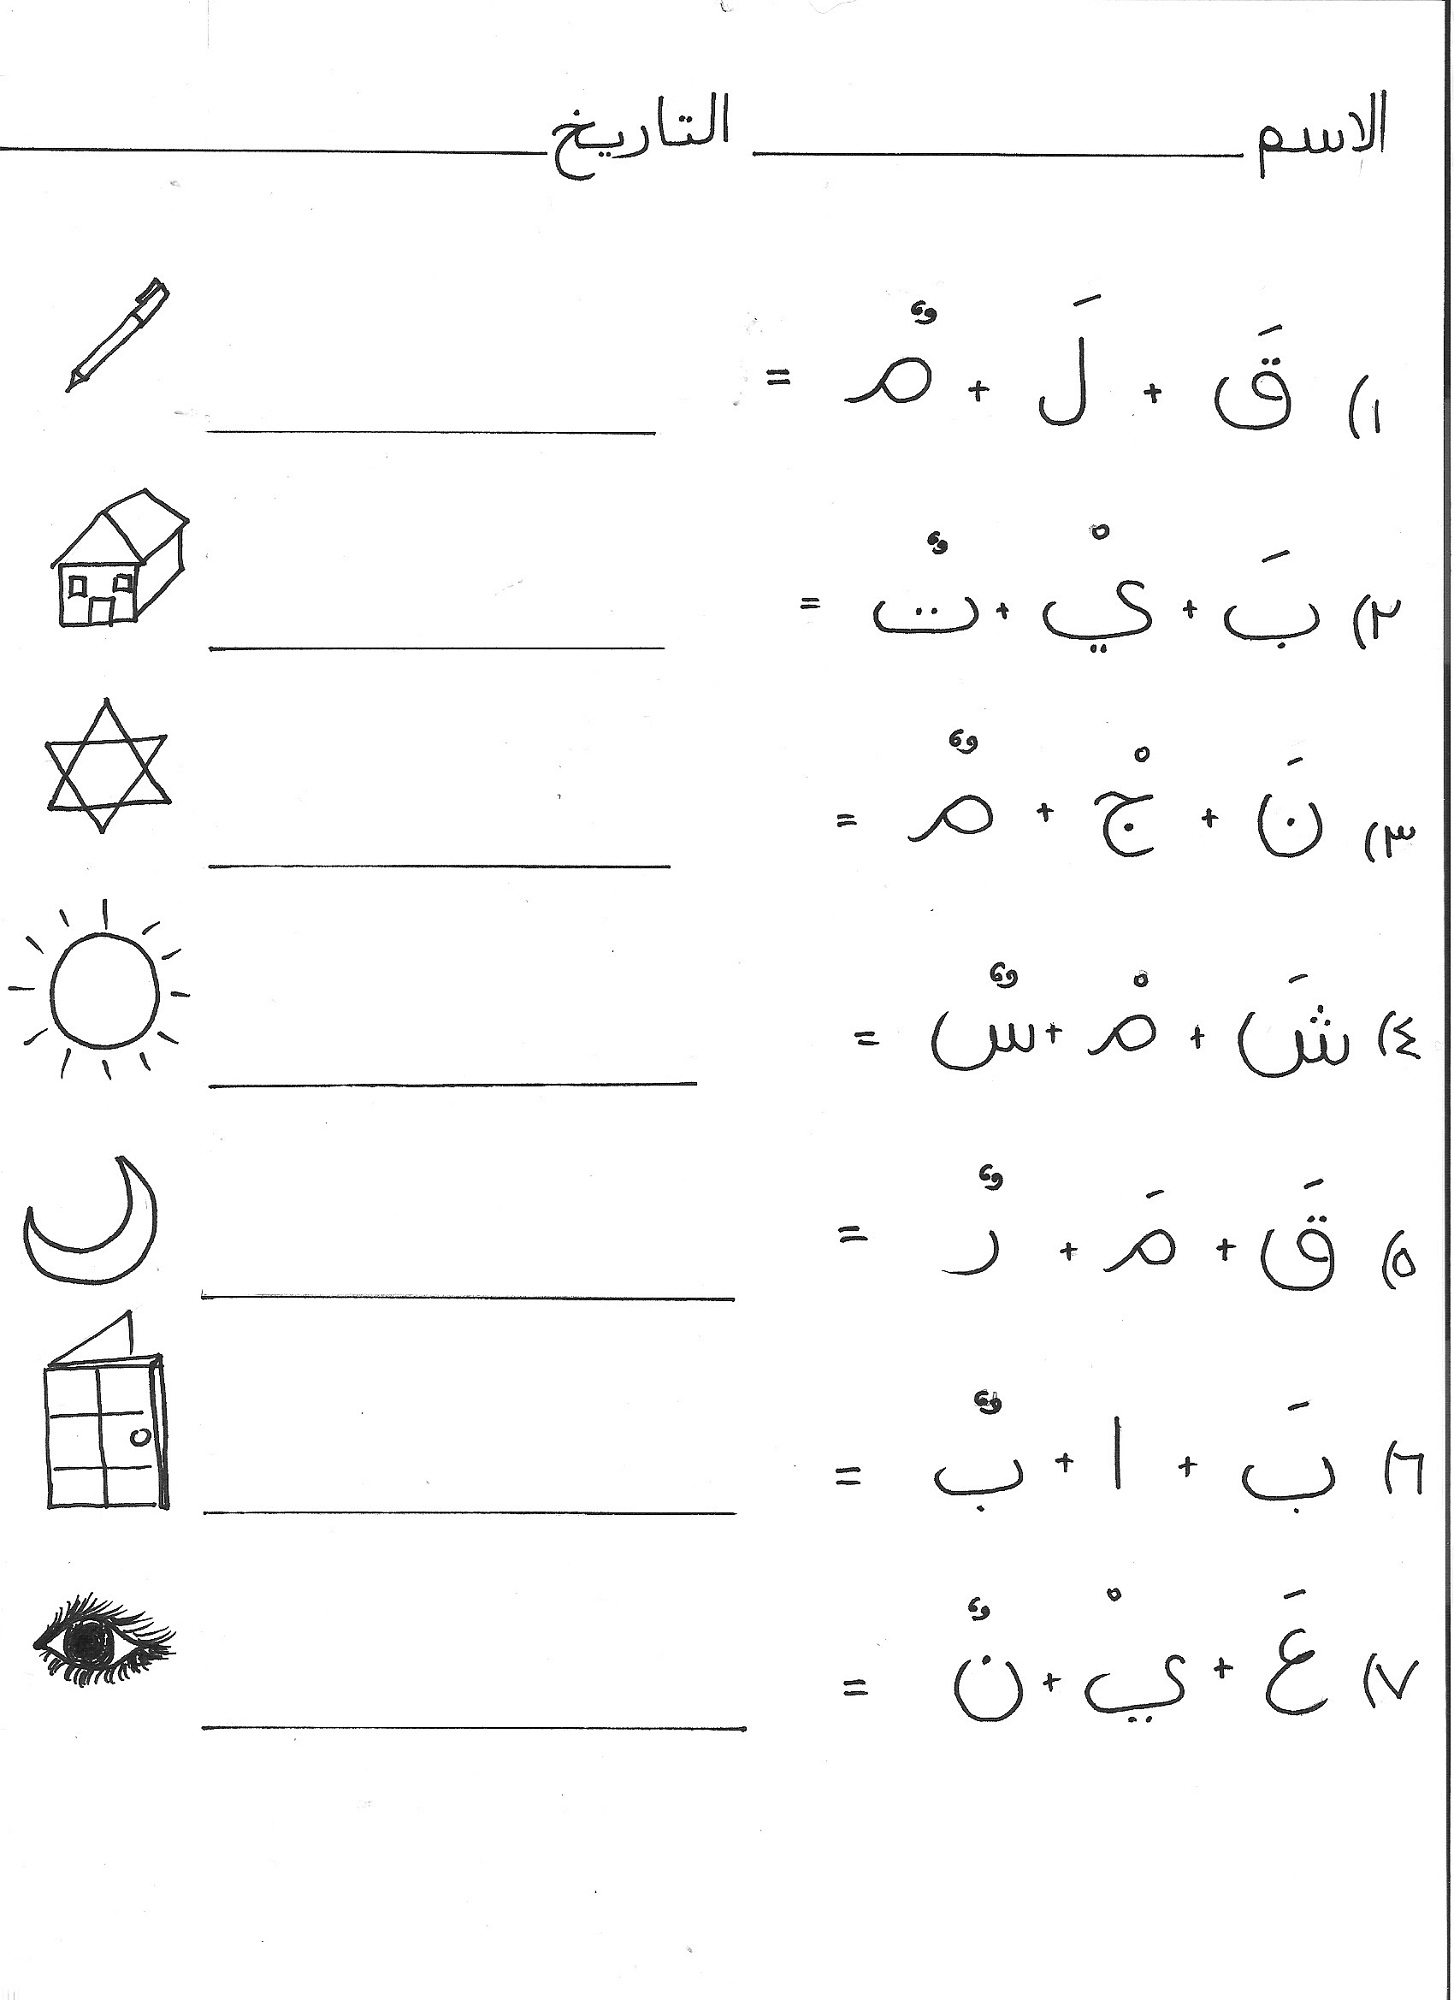 beginner-arabic-alphabet-worksheets-printable-pdf-worksheet-blog-5c4